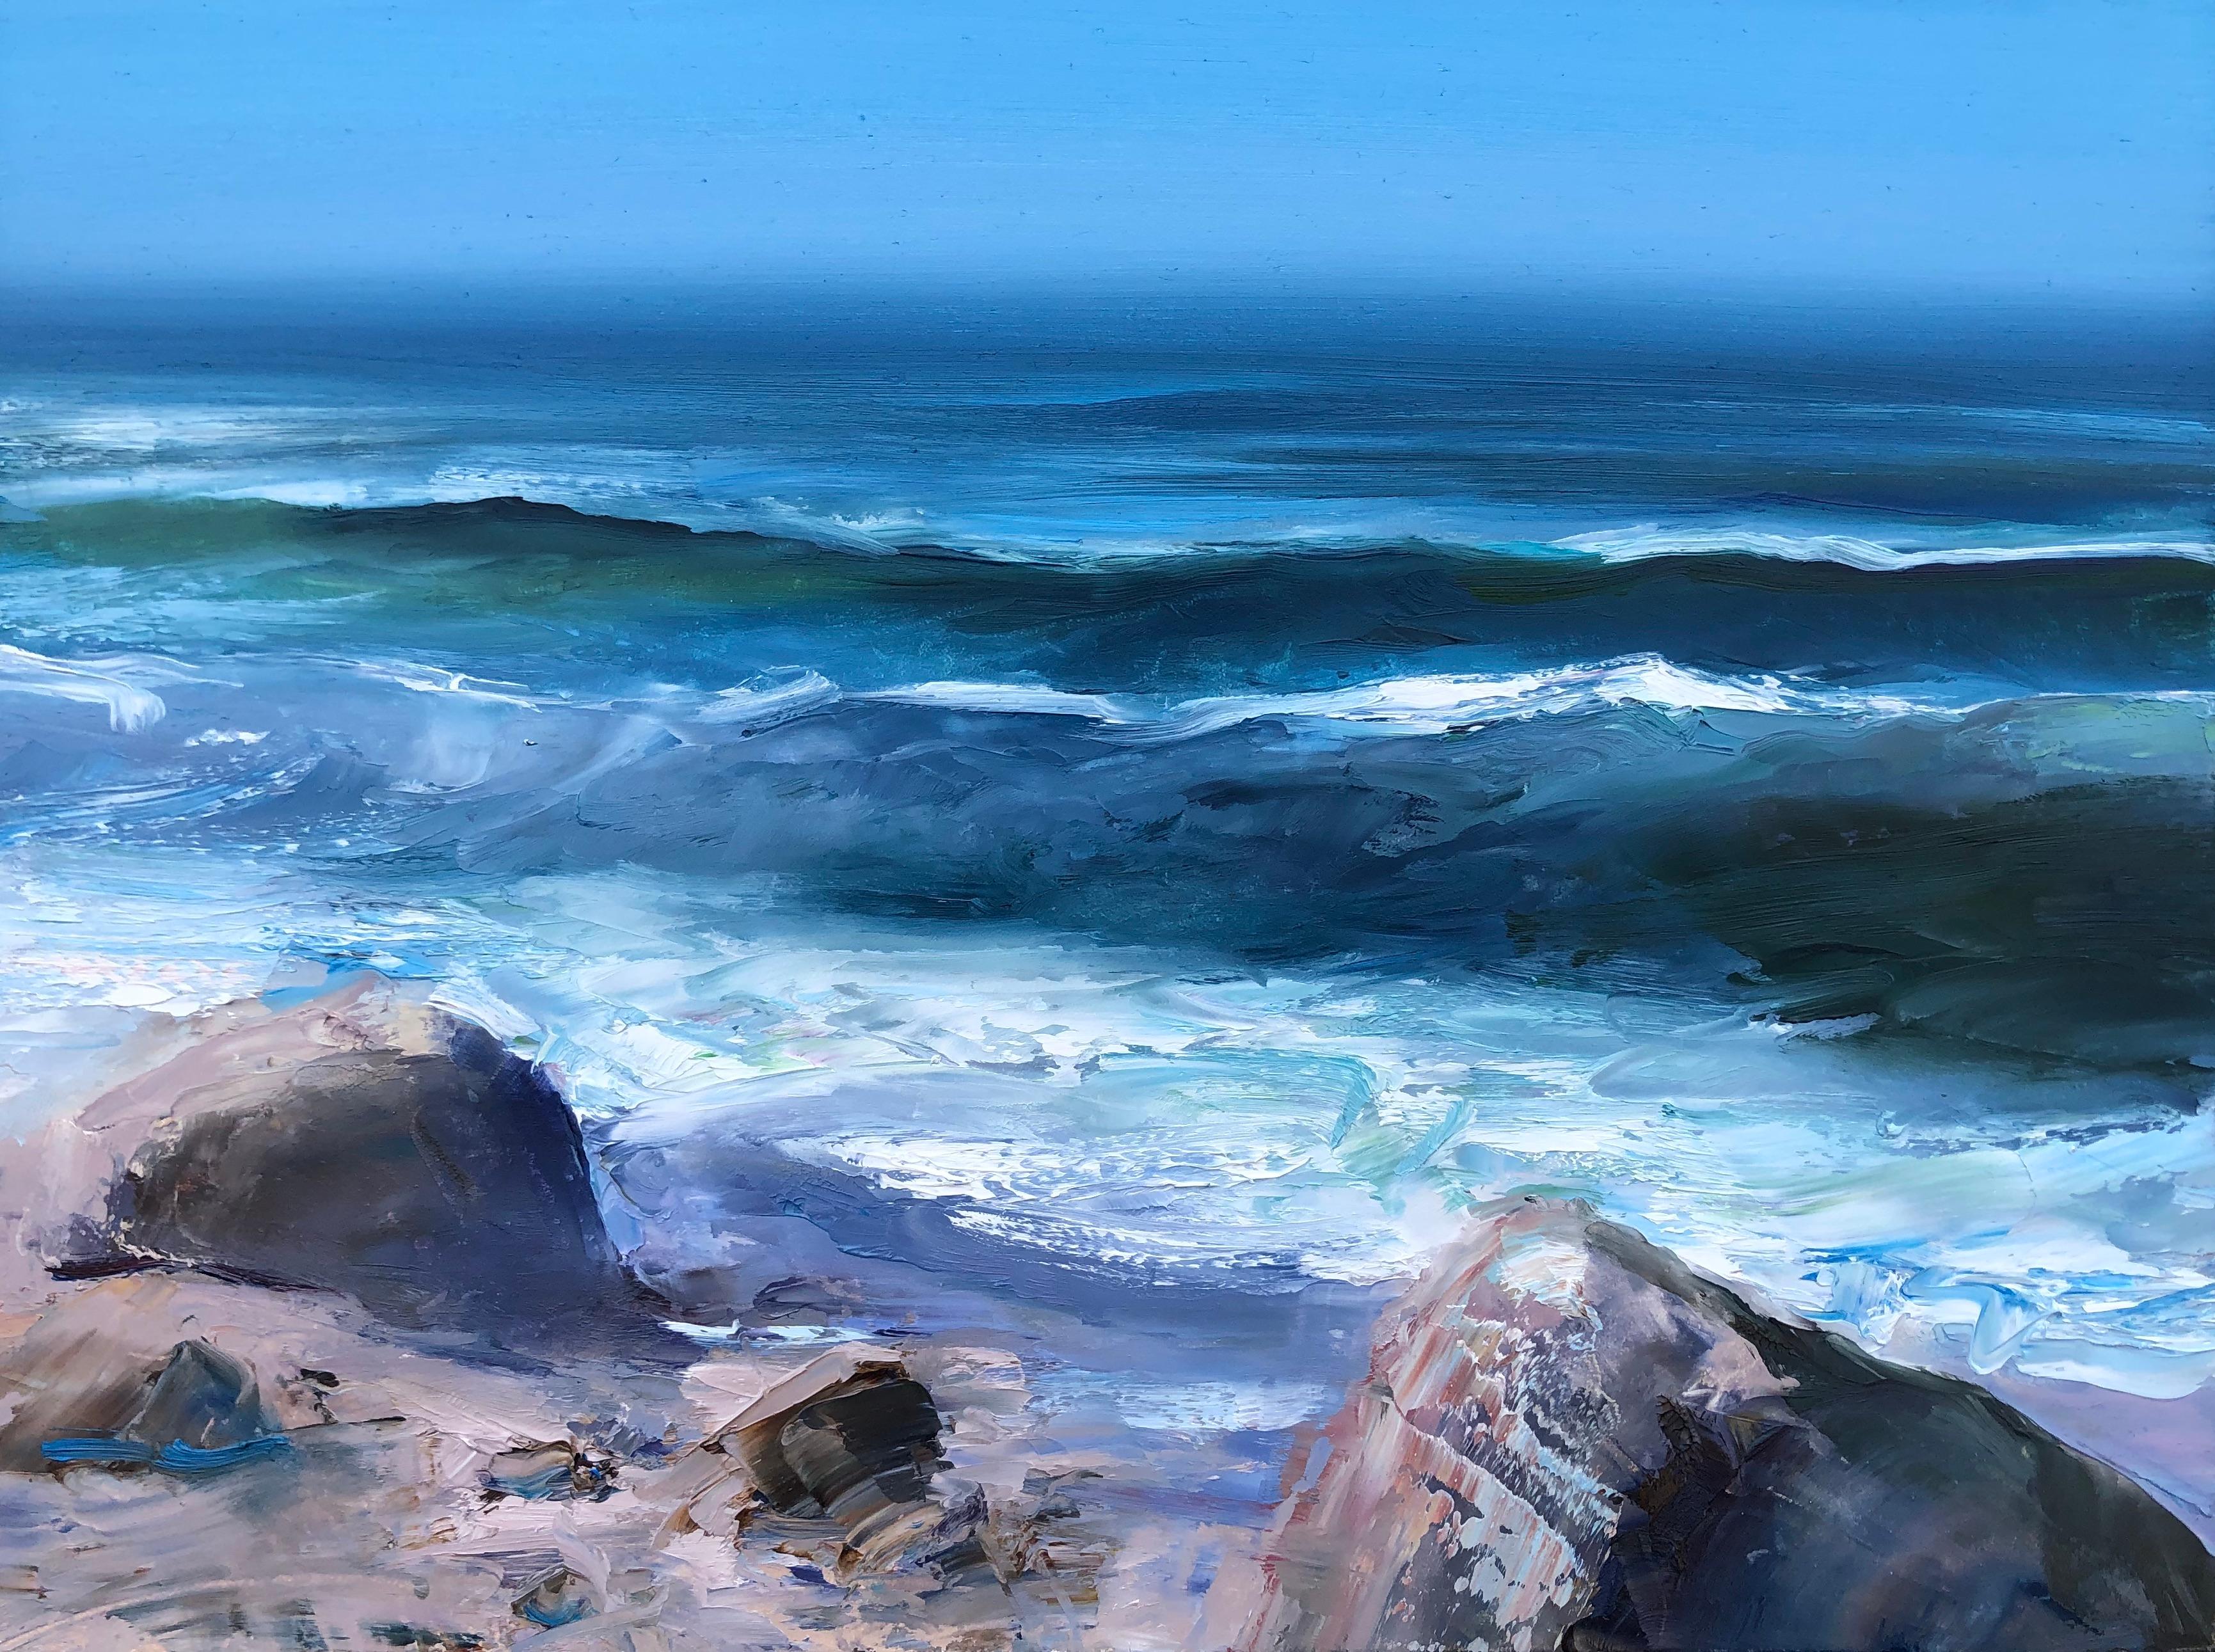 Whitney Knapp Landscape Painting - "Rocky Shoreline" oil painting of blue waves crashing on rocky shore